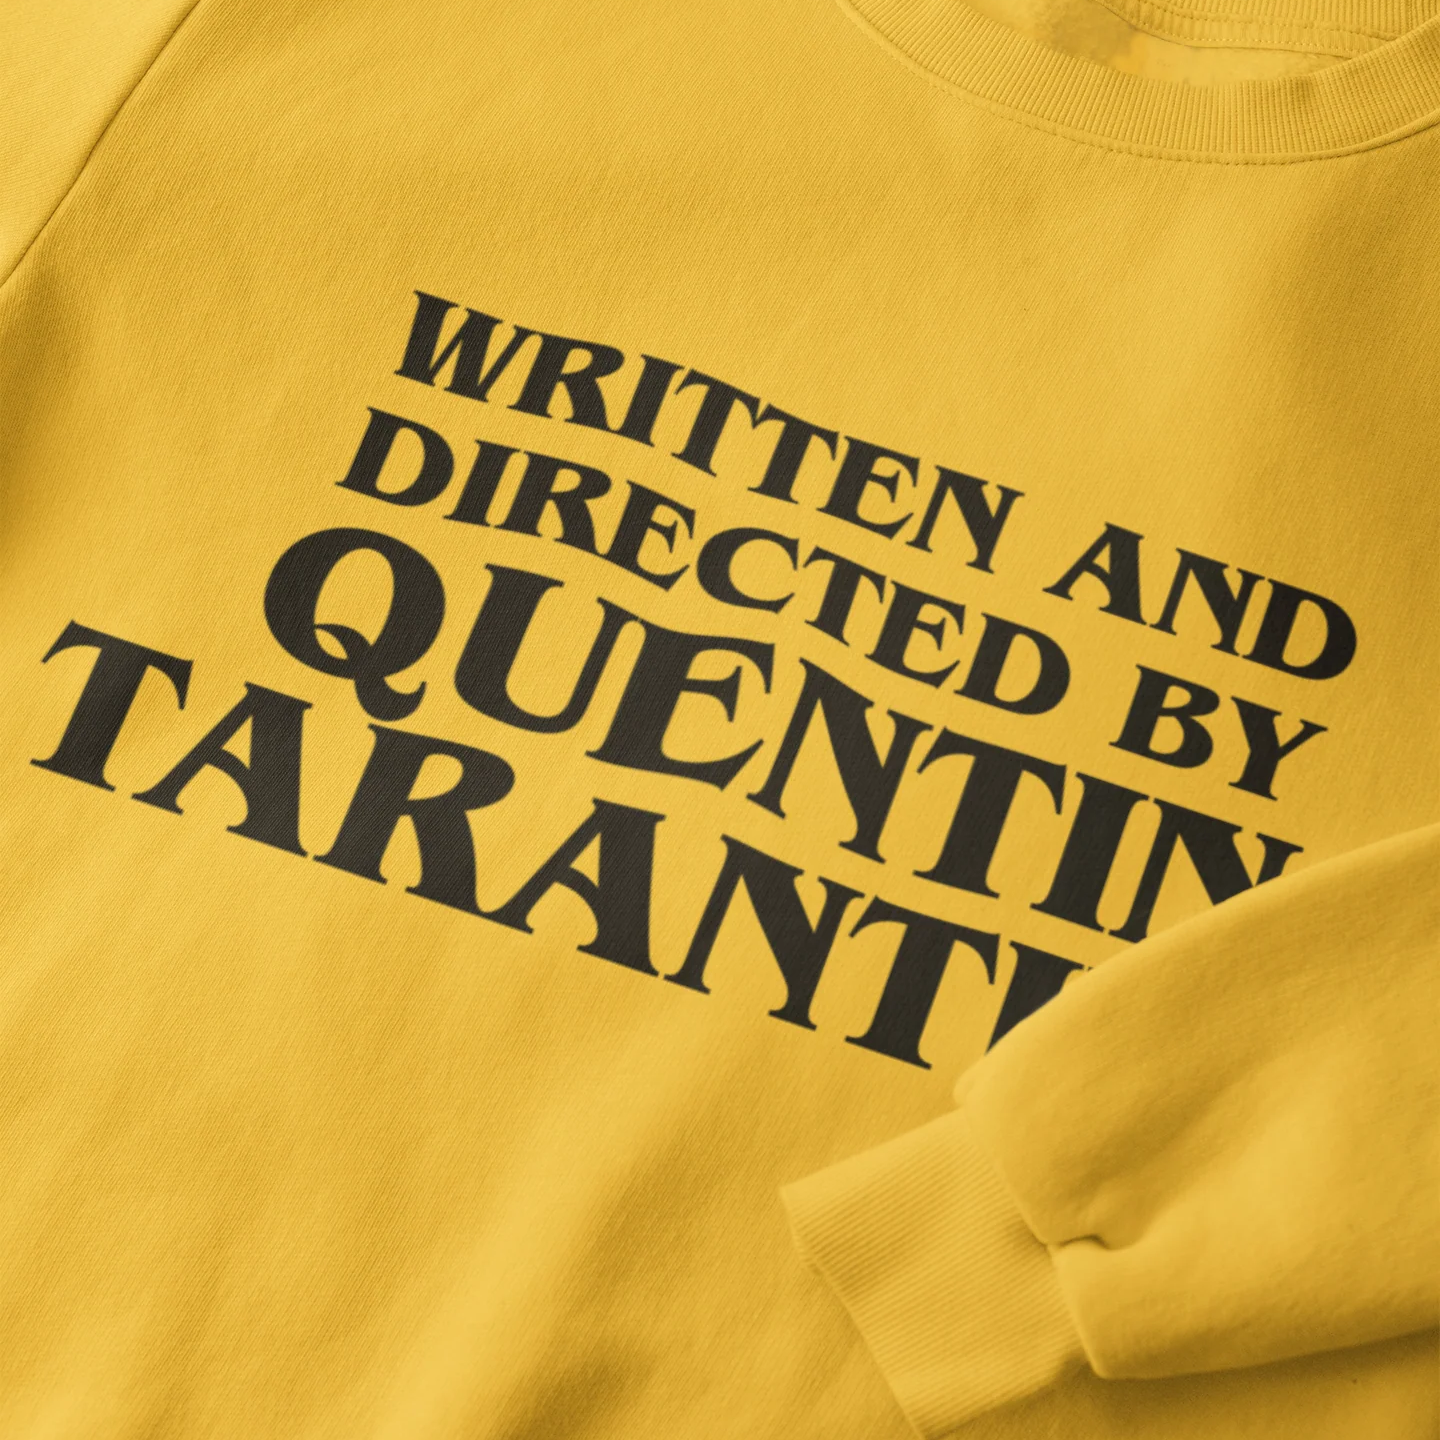 Quentin Tarantino -  Sweatshirt Gold